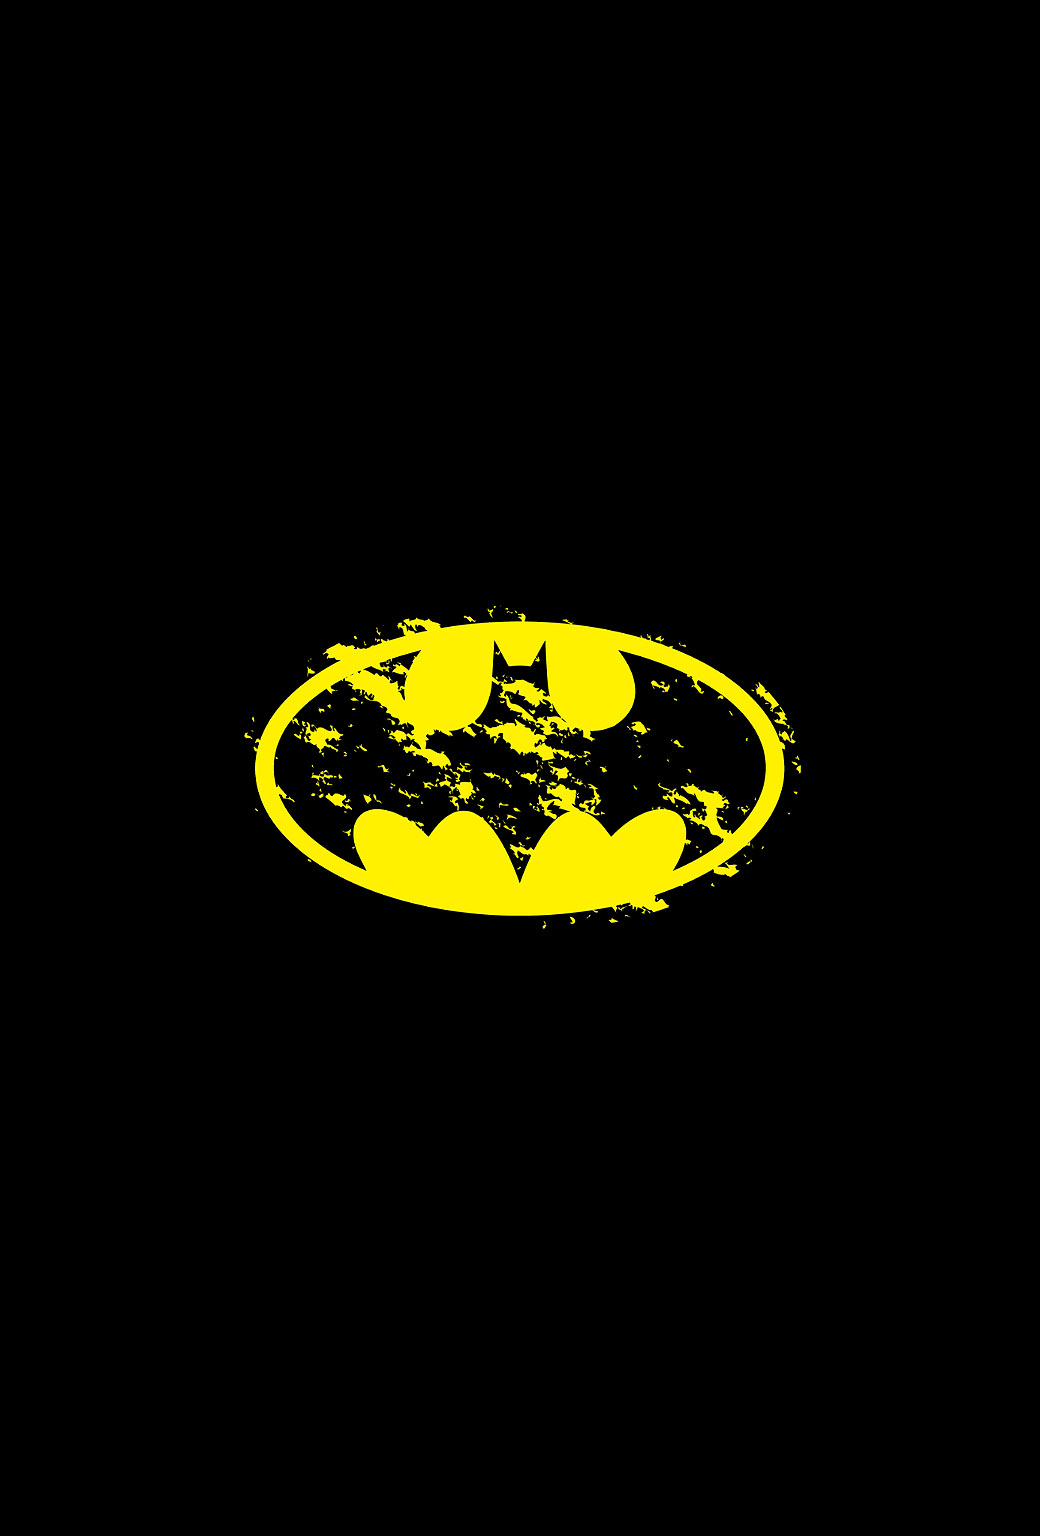 batman logo iphone wallpaper,black,yellow,batman,emblem,logo